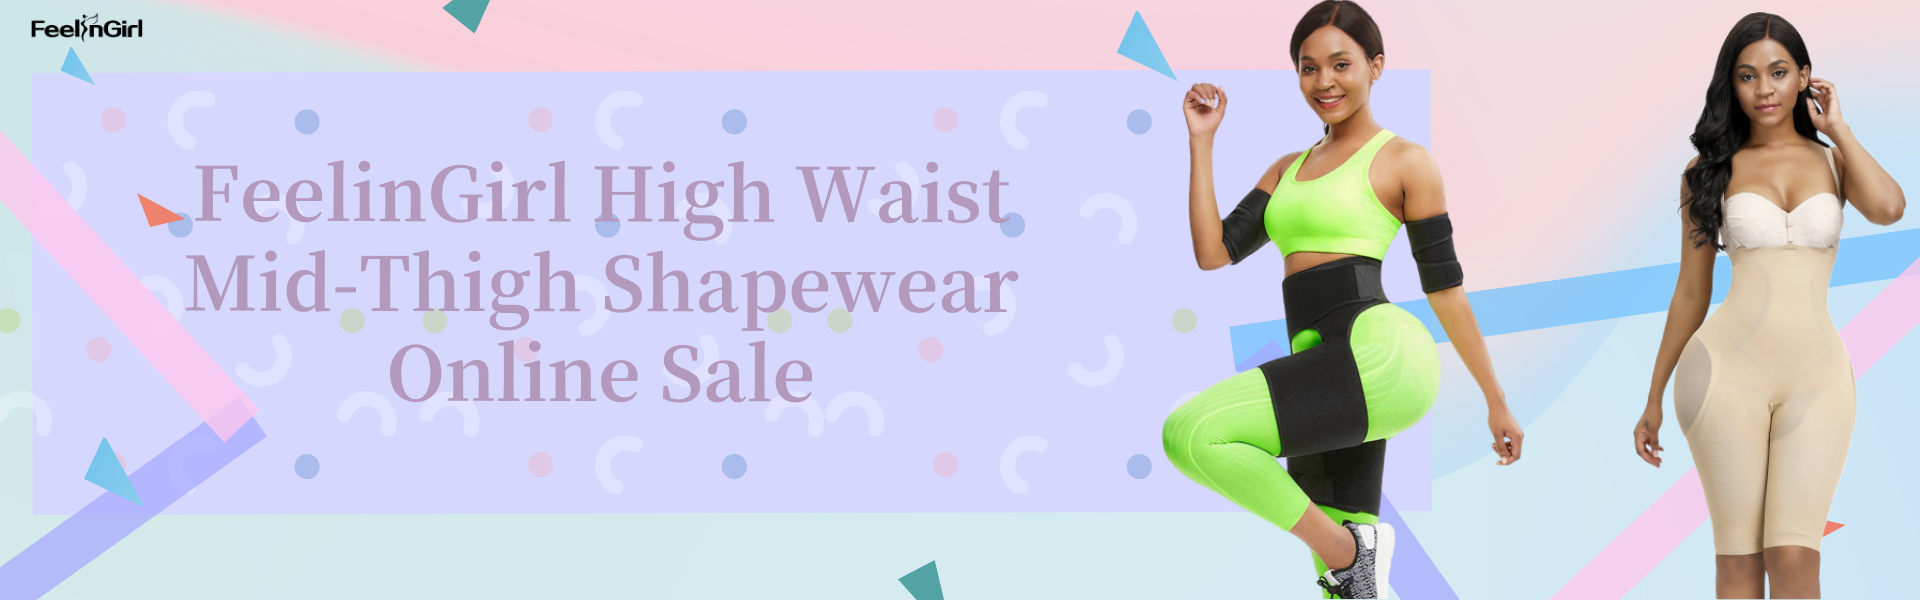 FeelinGirl High Waist Mid-Thigh Shapewear Online Sale